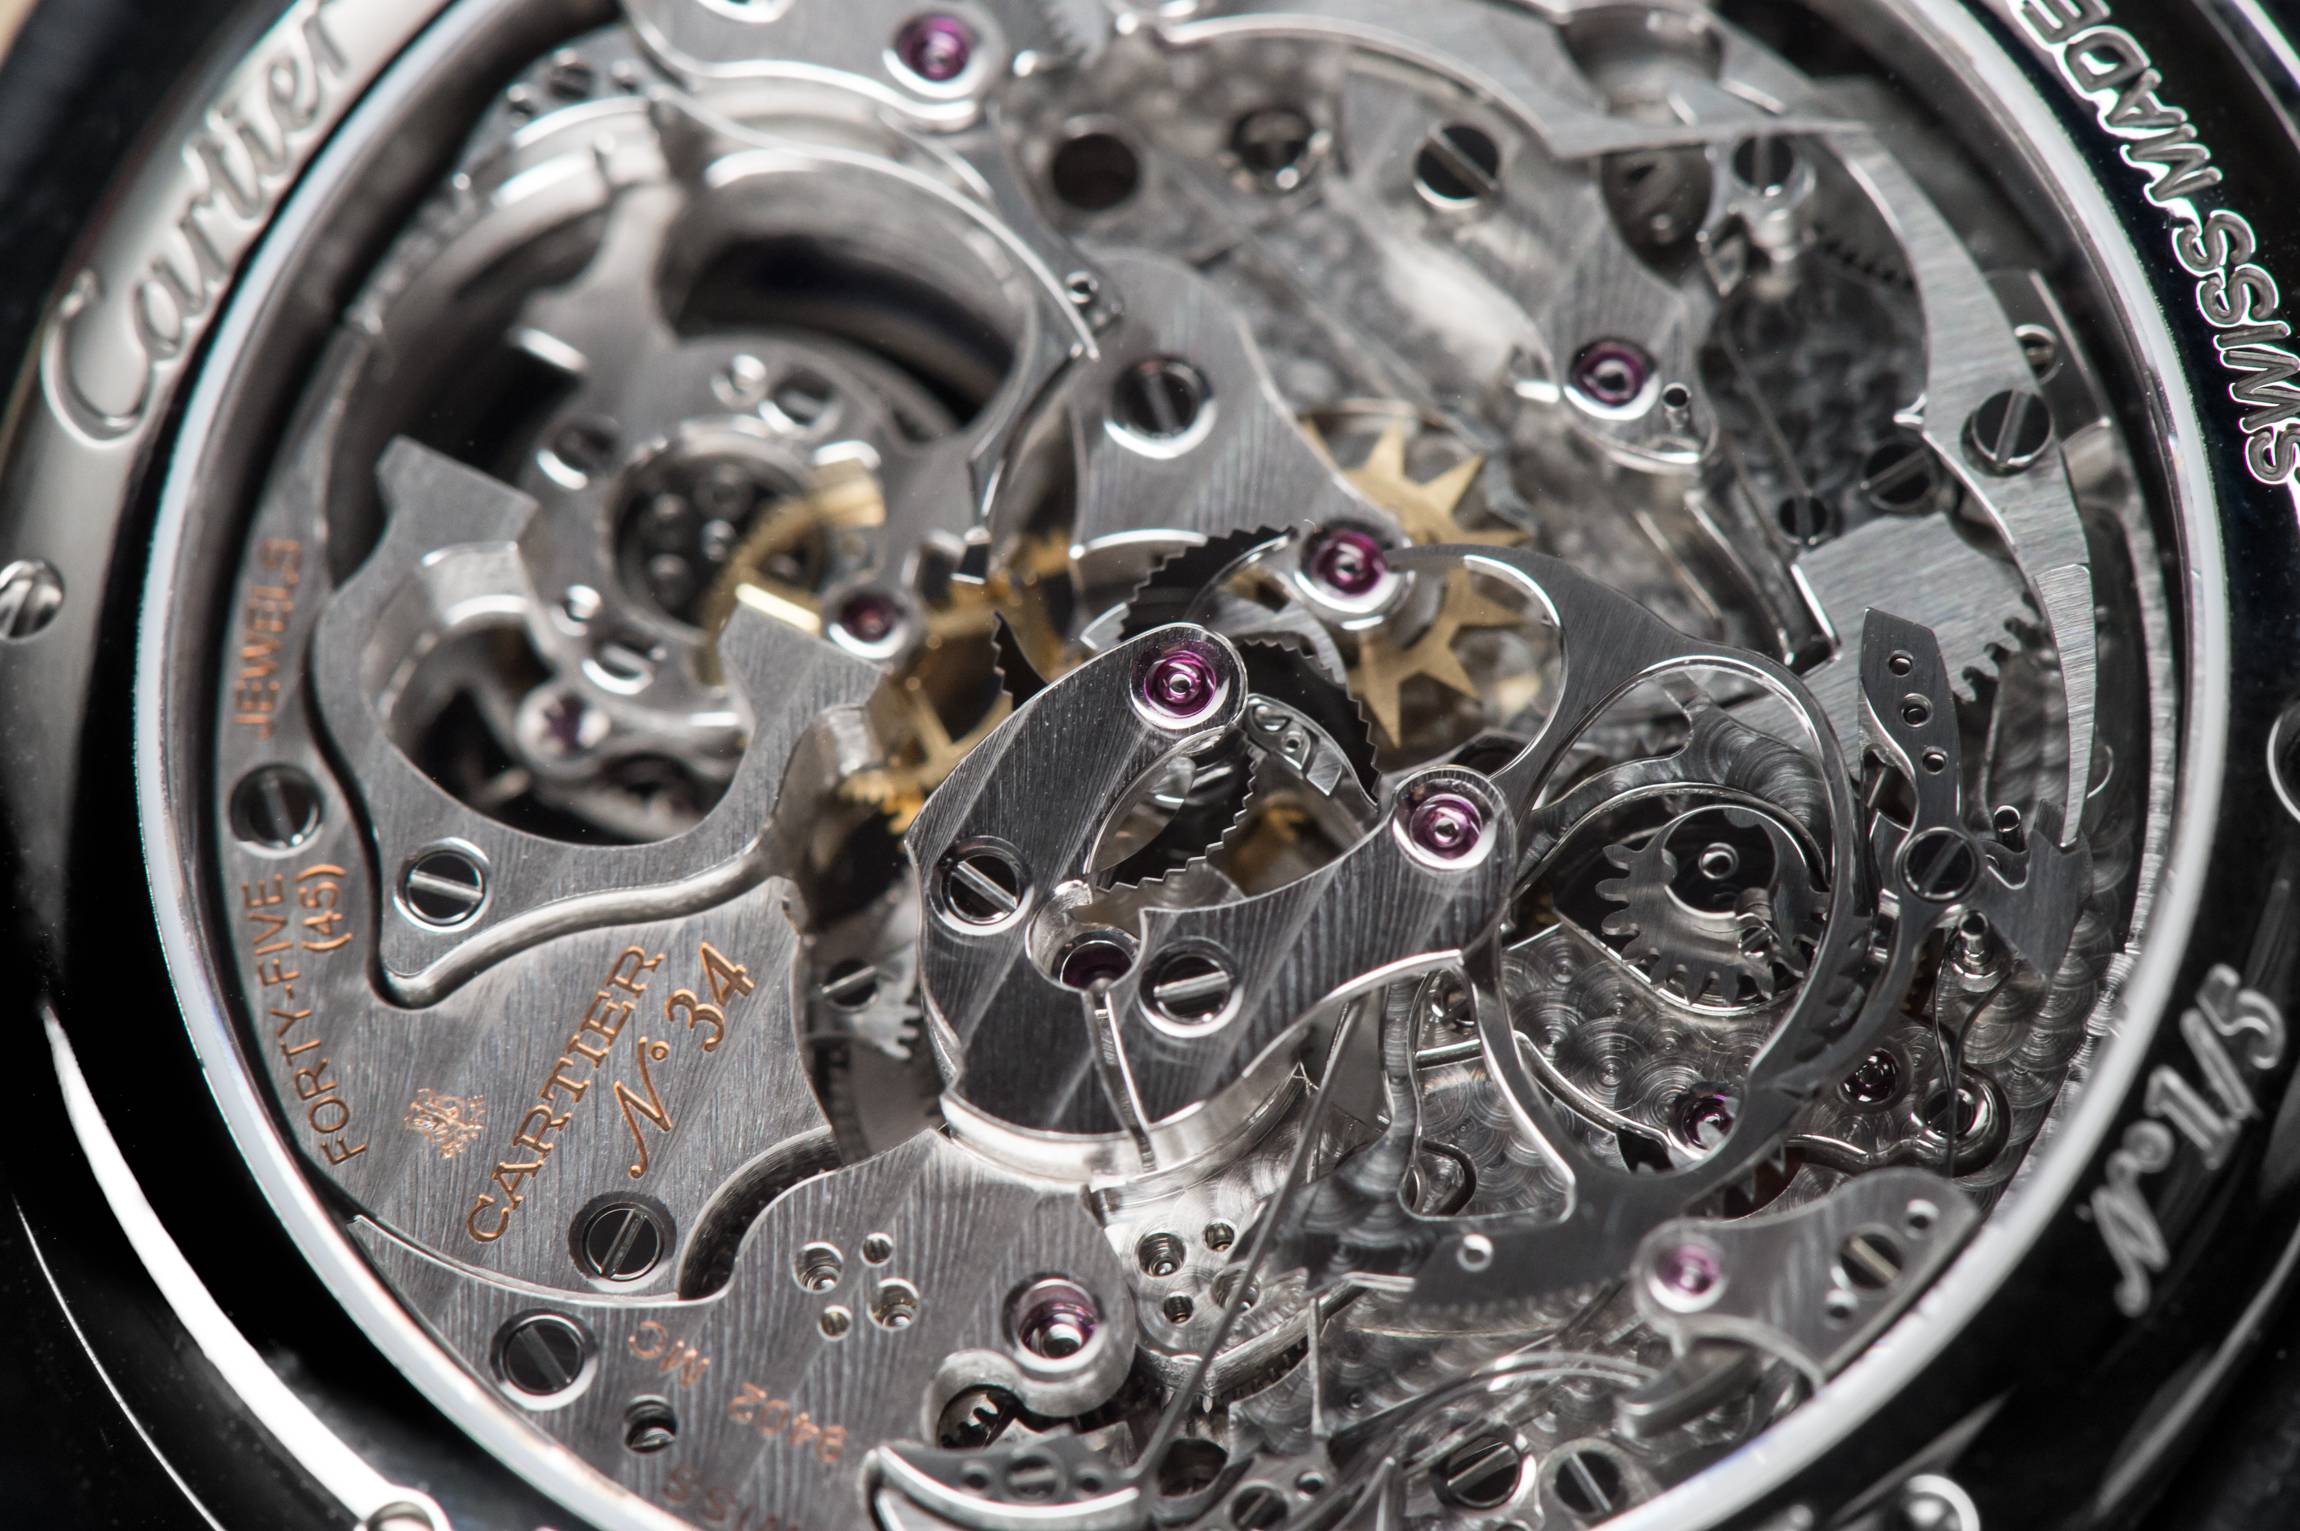 Cartier Rotonde de Cartier Minute Repeater Flying Tourbillon Calibre 9402 MC "Poinçon de genève" certified watch back close up